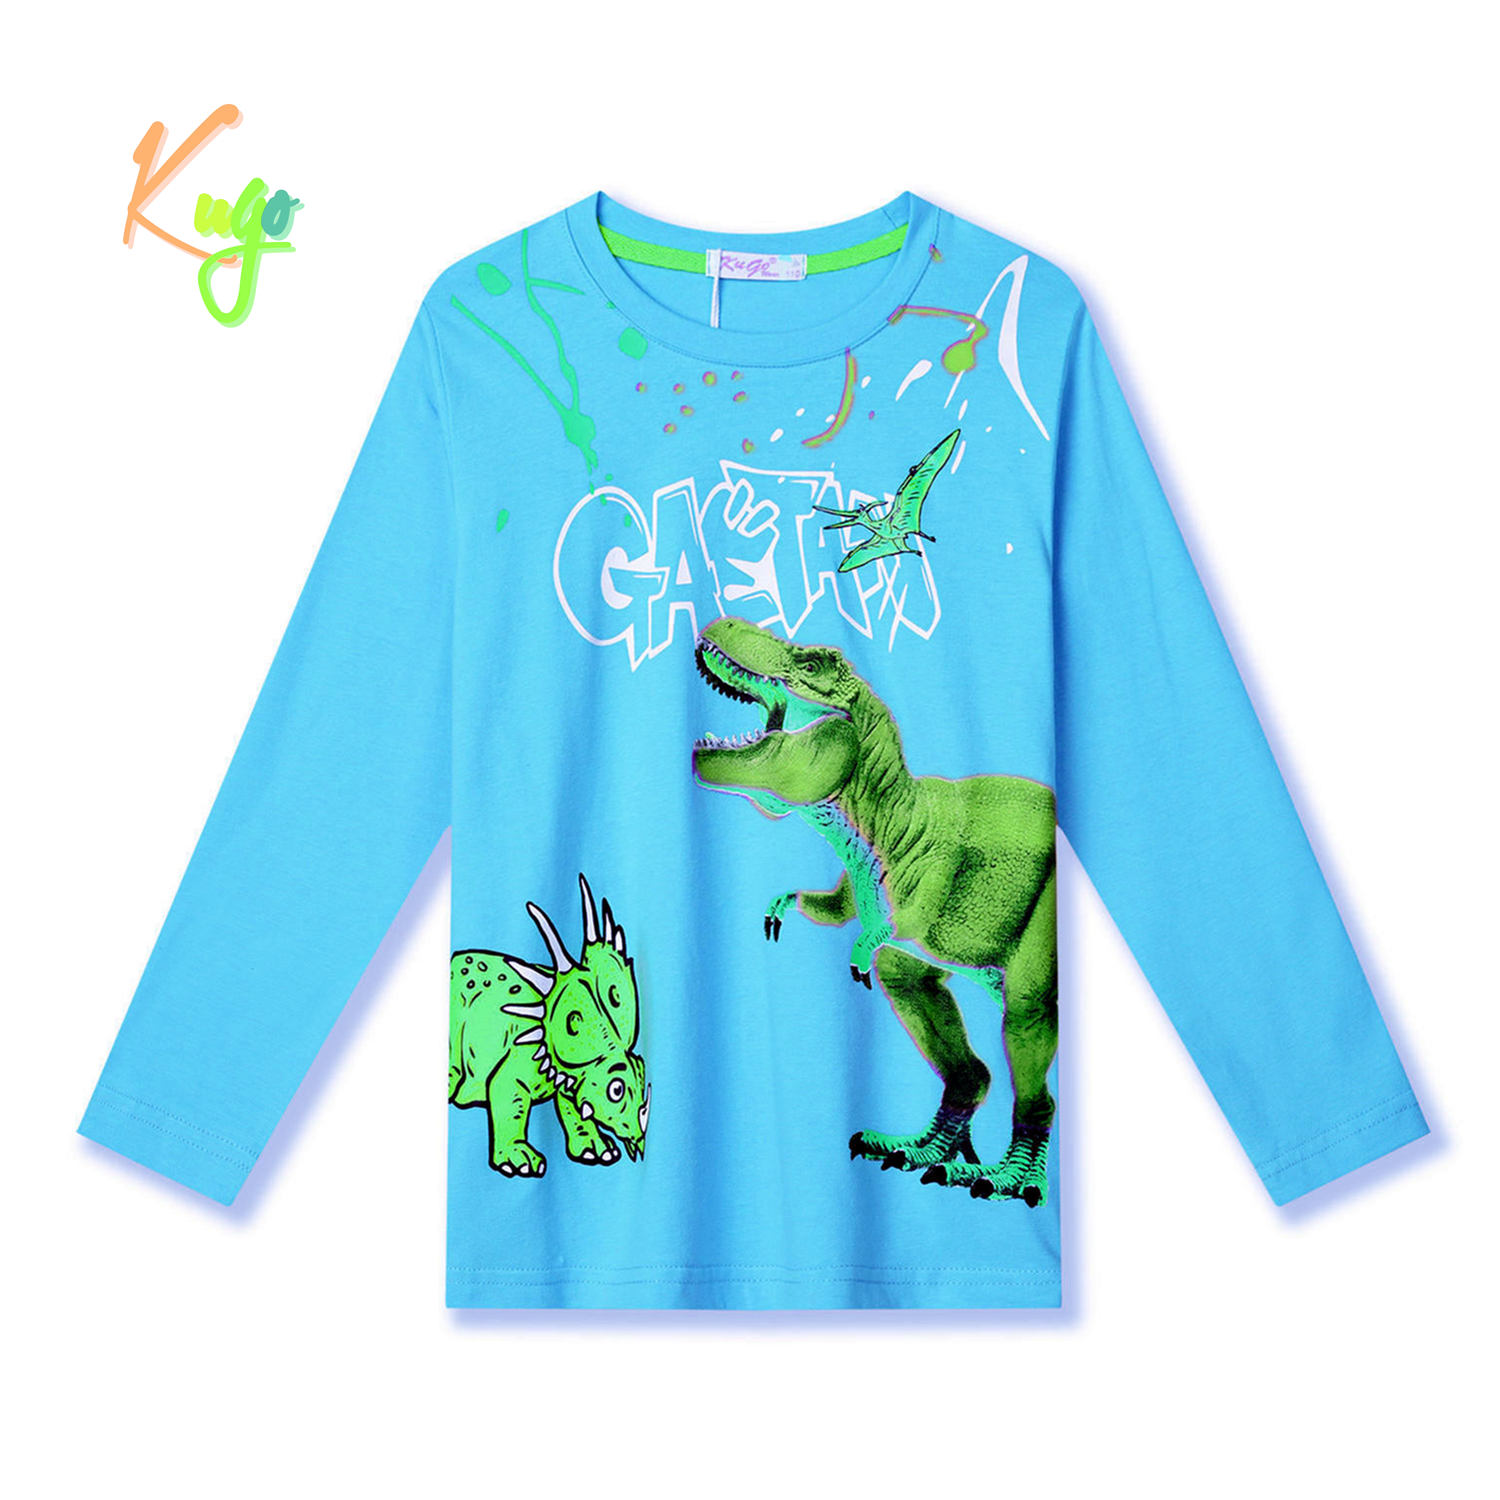 Chlapecké tričko - KUGO HC9307, modrá Barva: Modrá, Velikost: 98